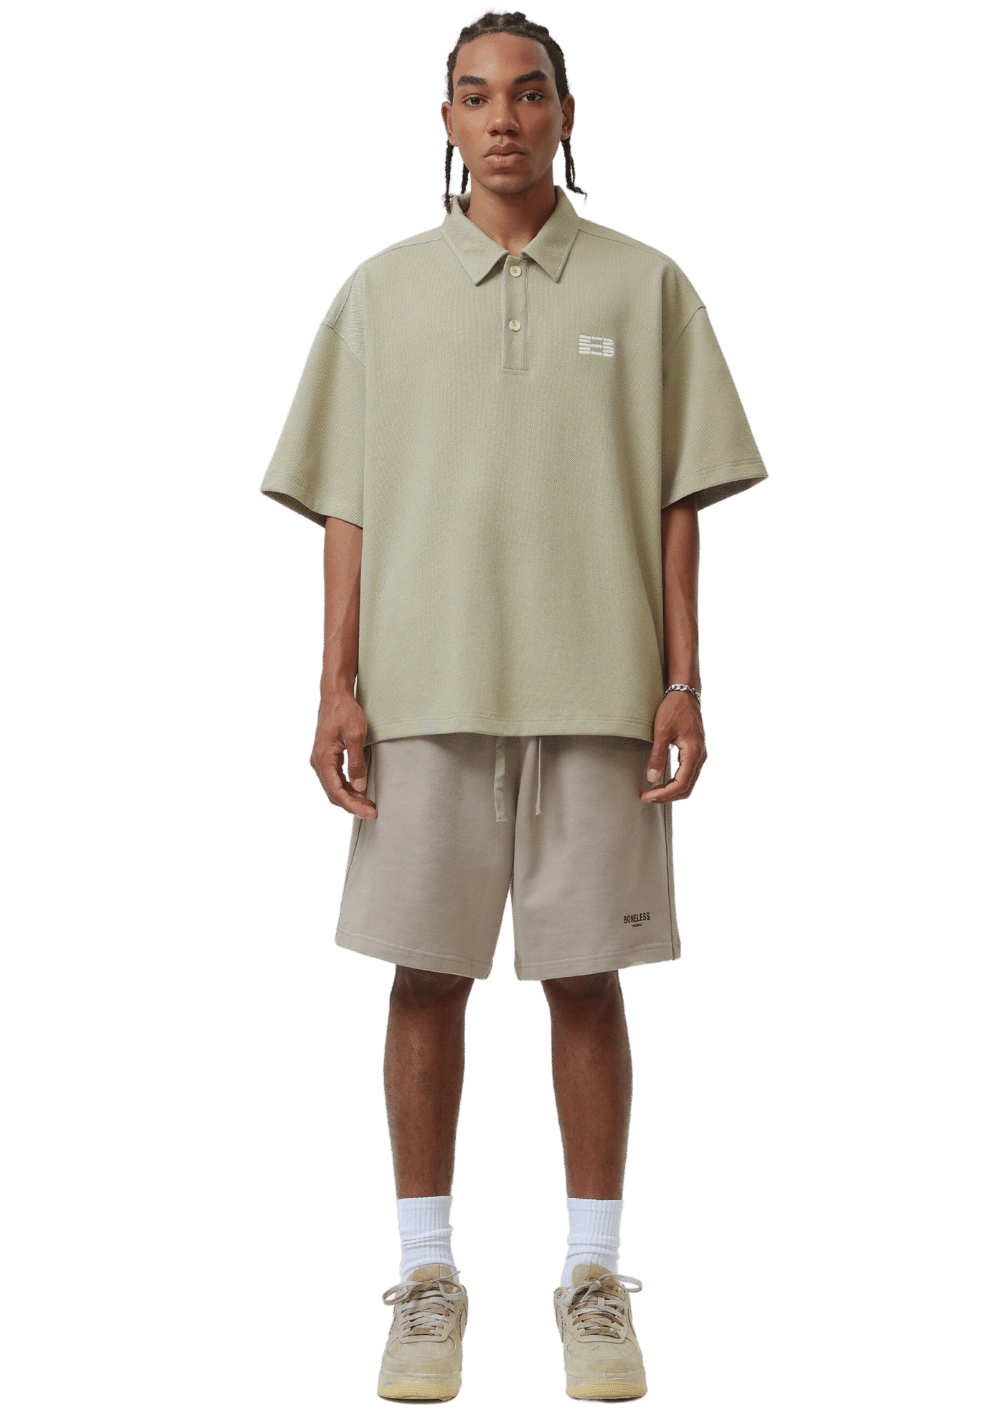 Basic Polo Shirt - PSYLOS 1, Basic Polo Shirt, T-Shirt, Boneless, PSYLOS 1